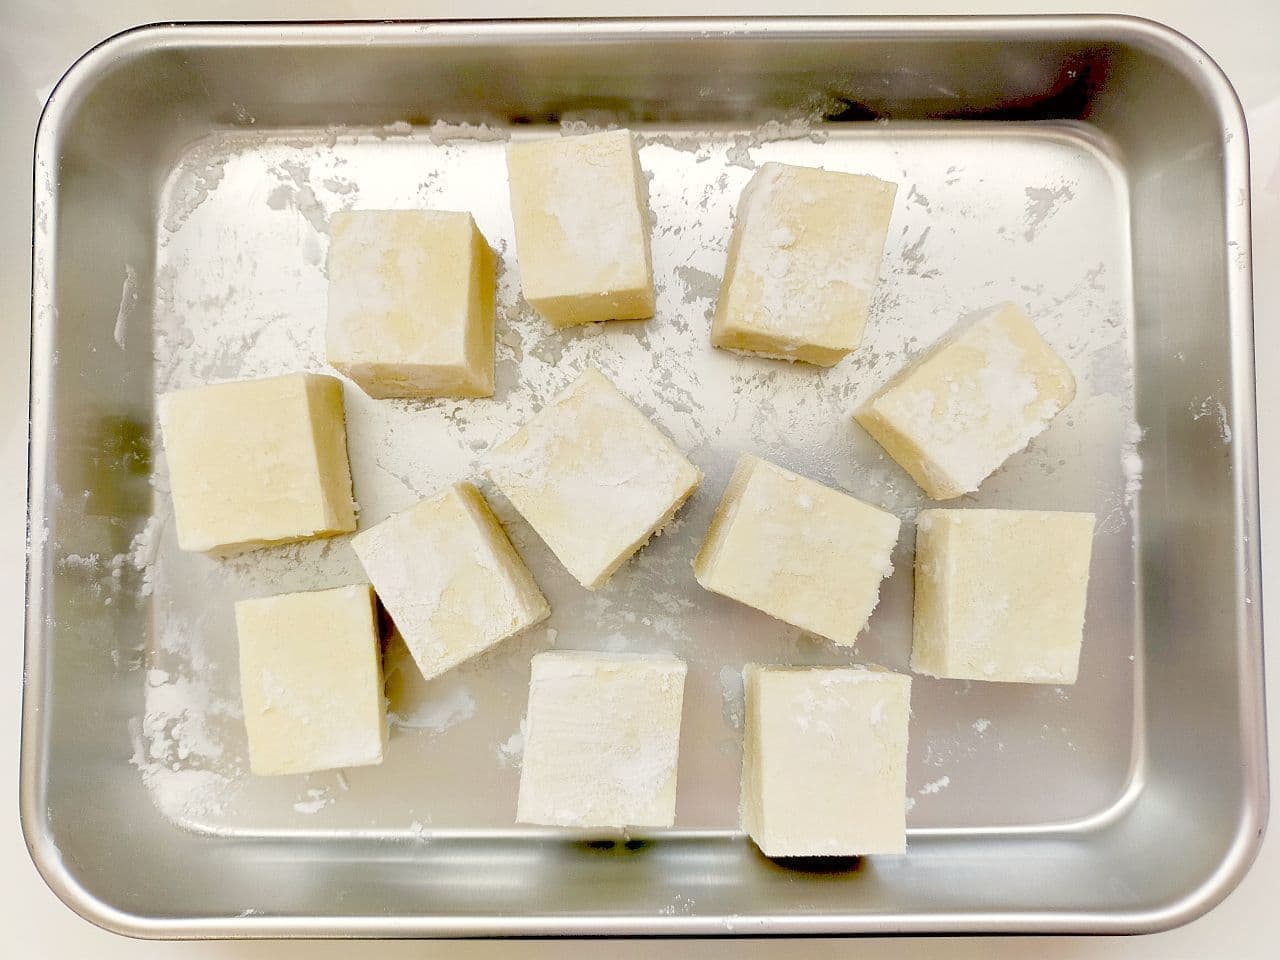 "Fried Koya tofu" recipe